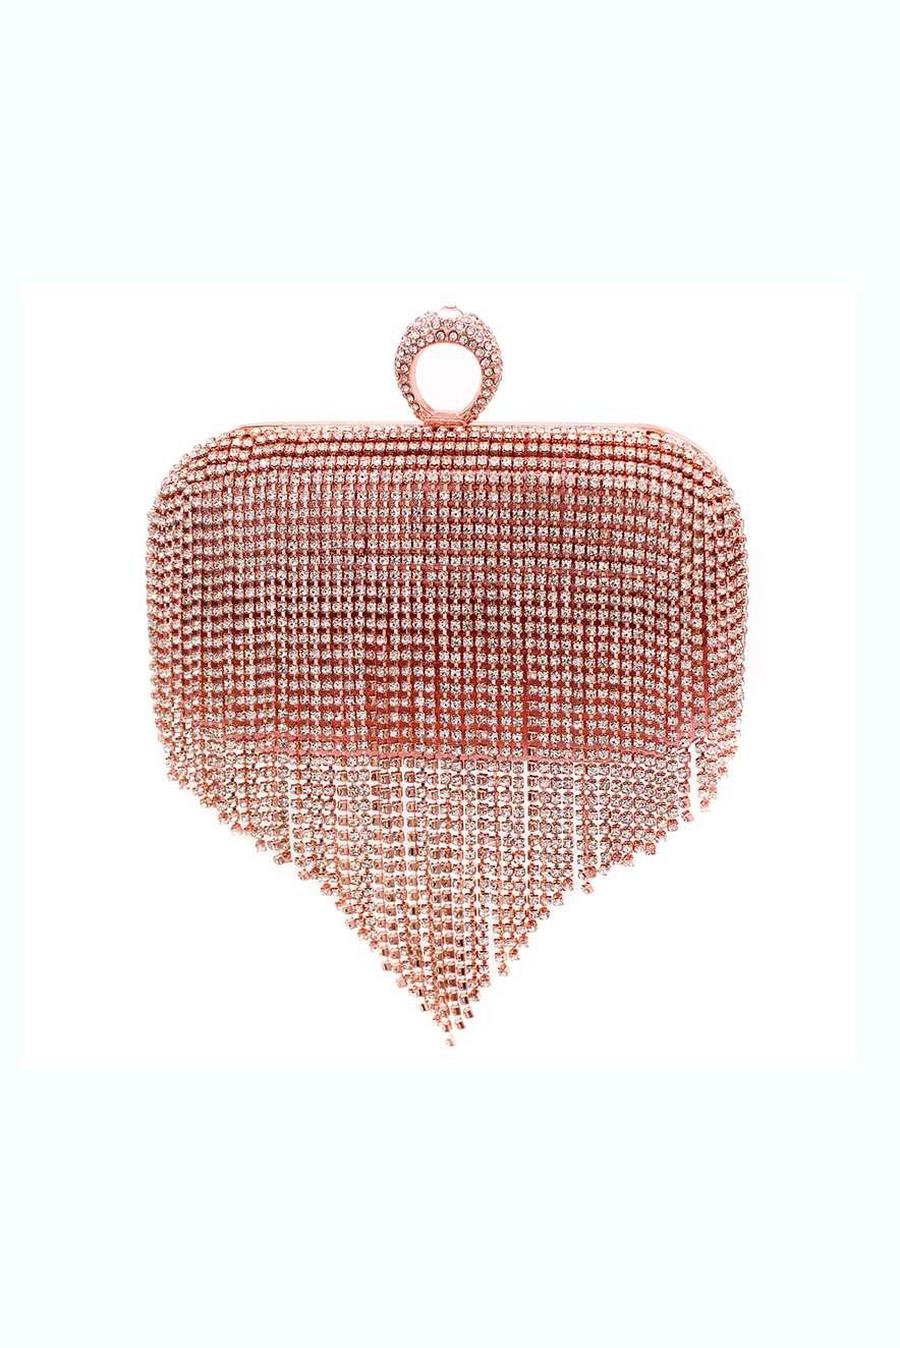 Rose gold Crystal Rhinestones Evening Clutch Glitter Handbag with Chain